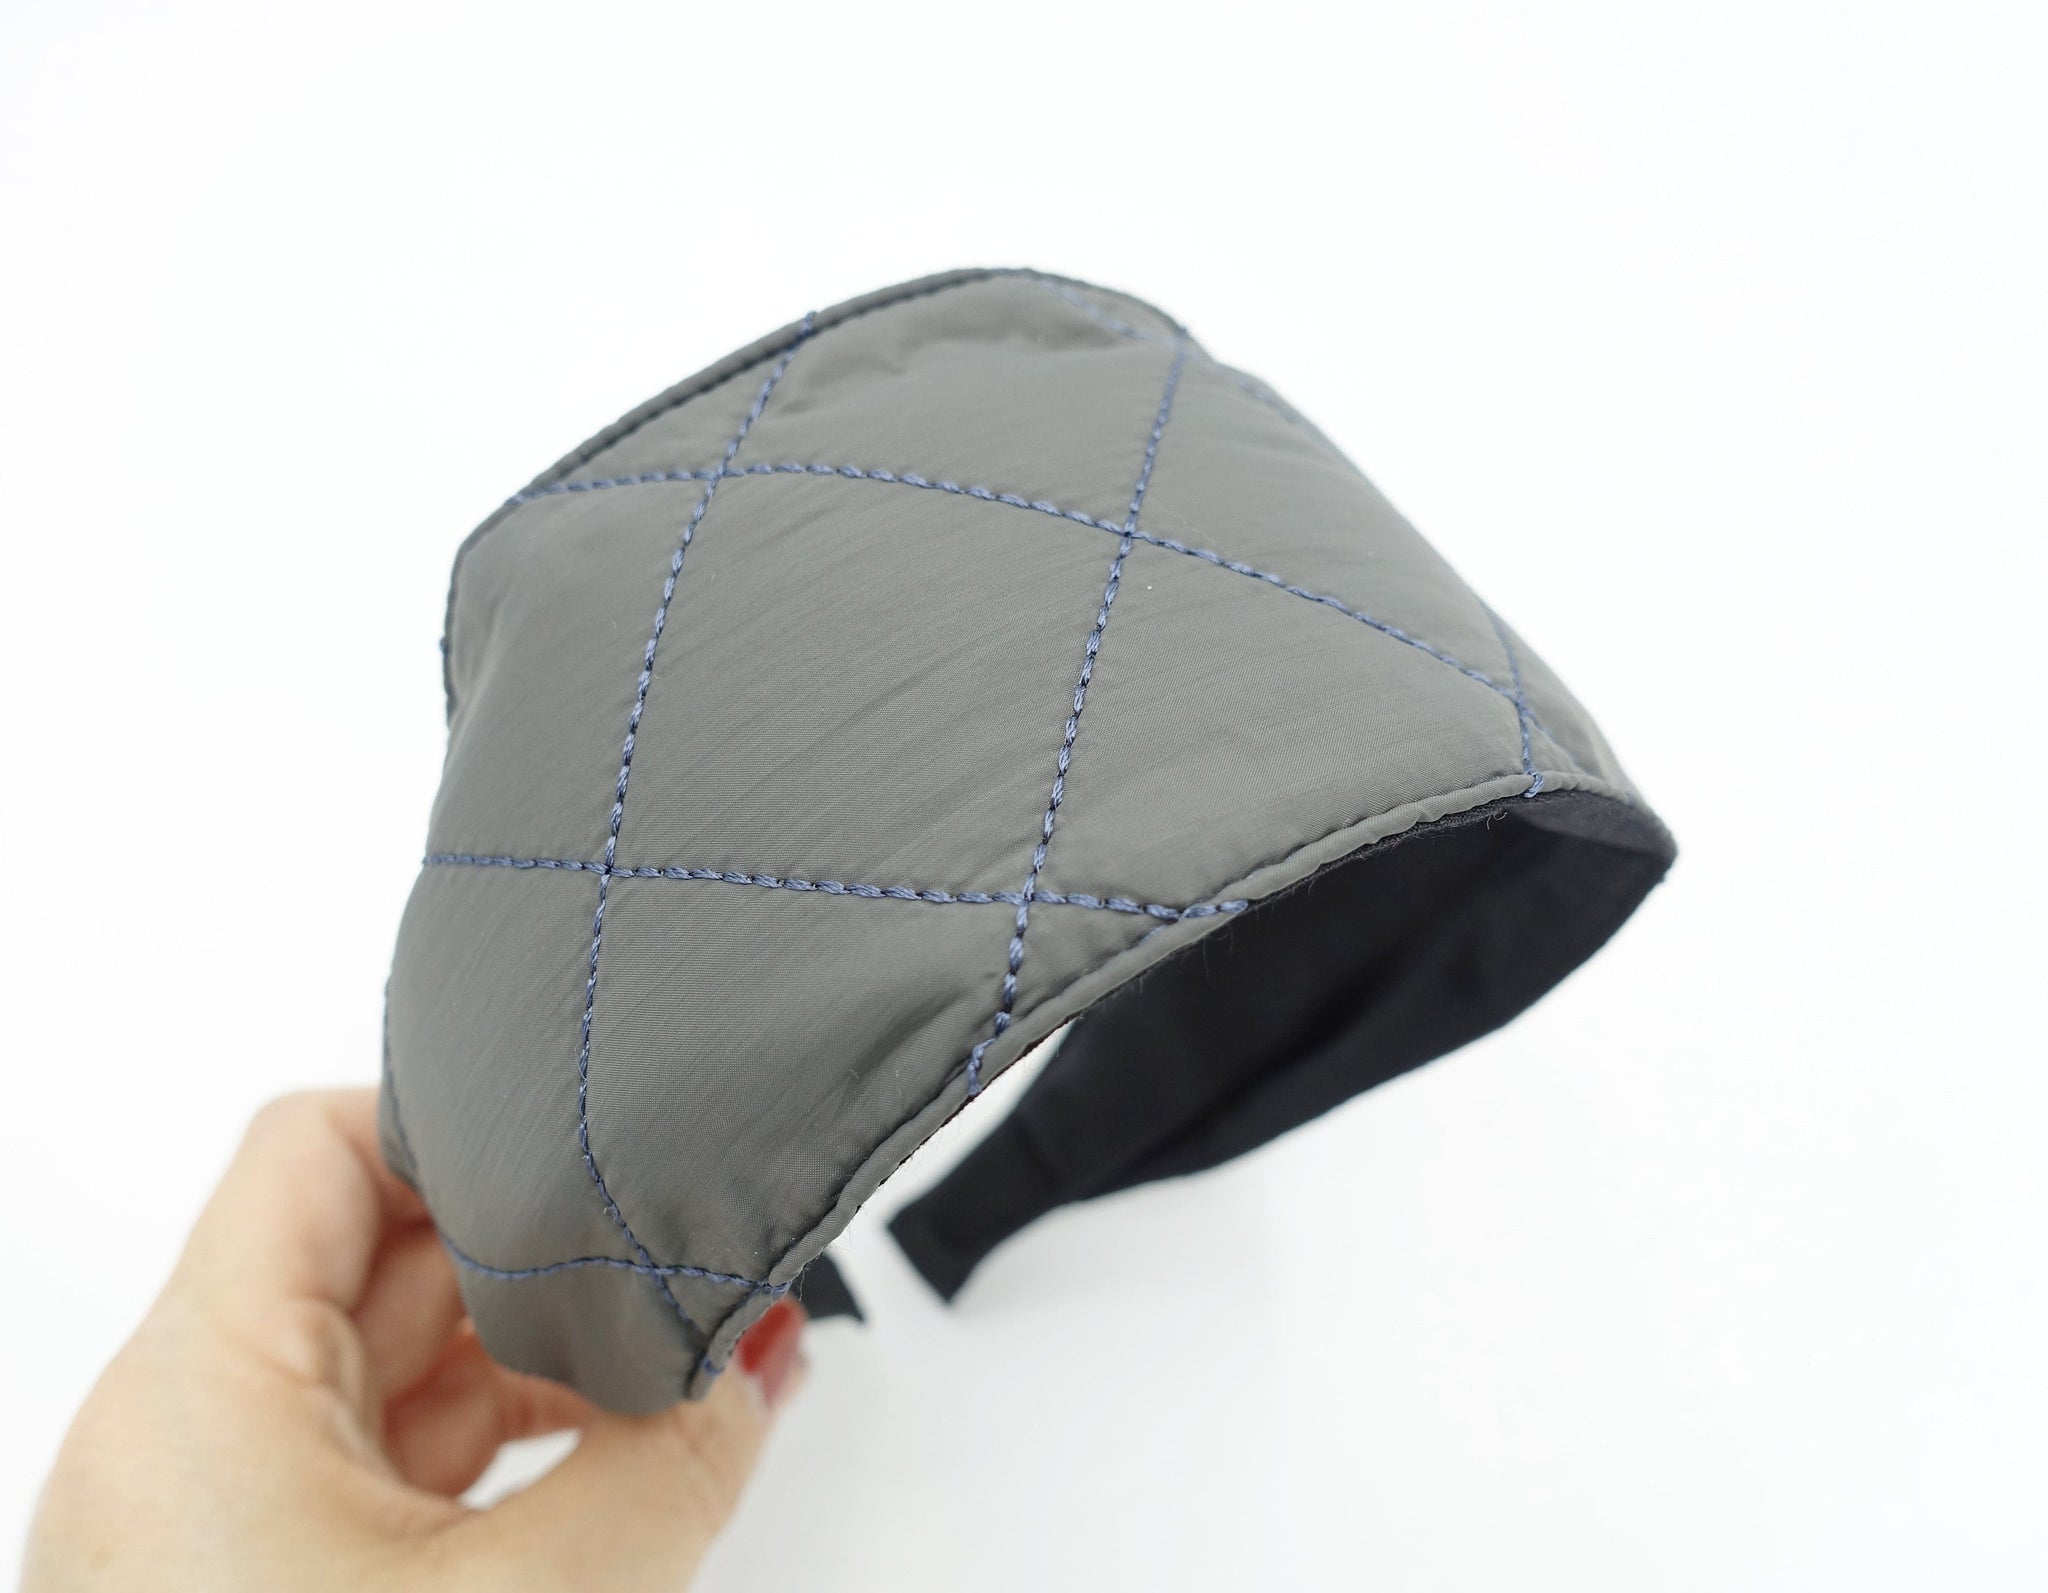 VeryShine Headband Gray quilted headband padding headband flat style Fall Winter hair accessory for women